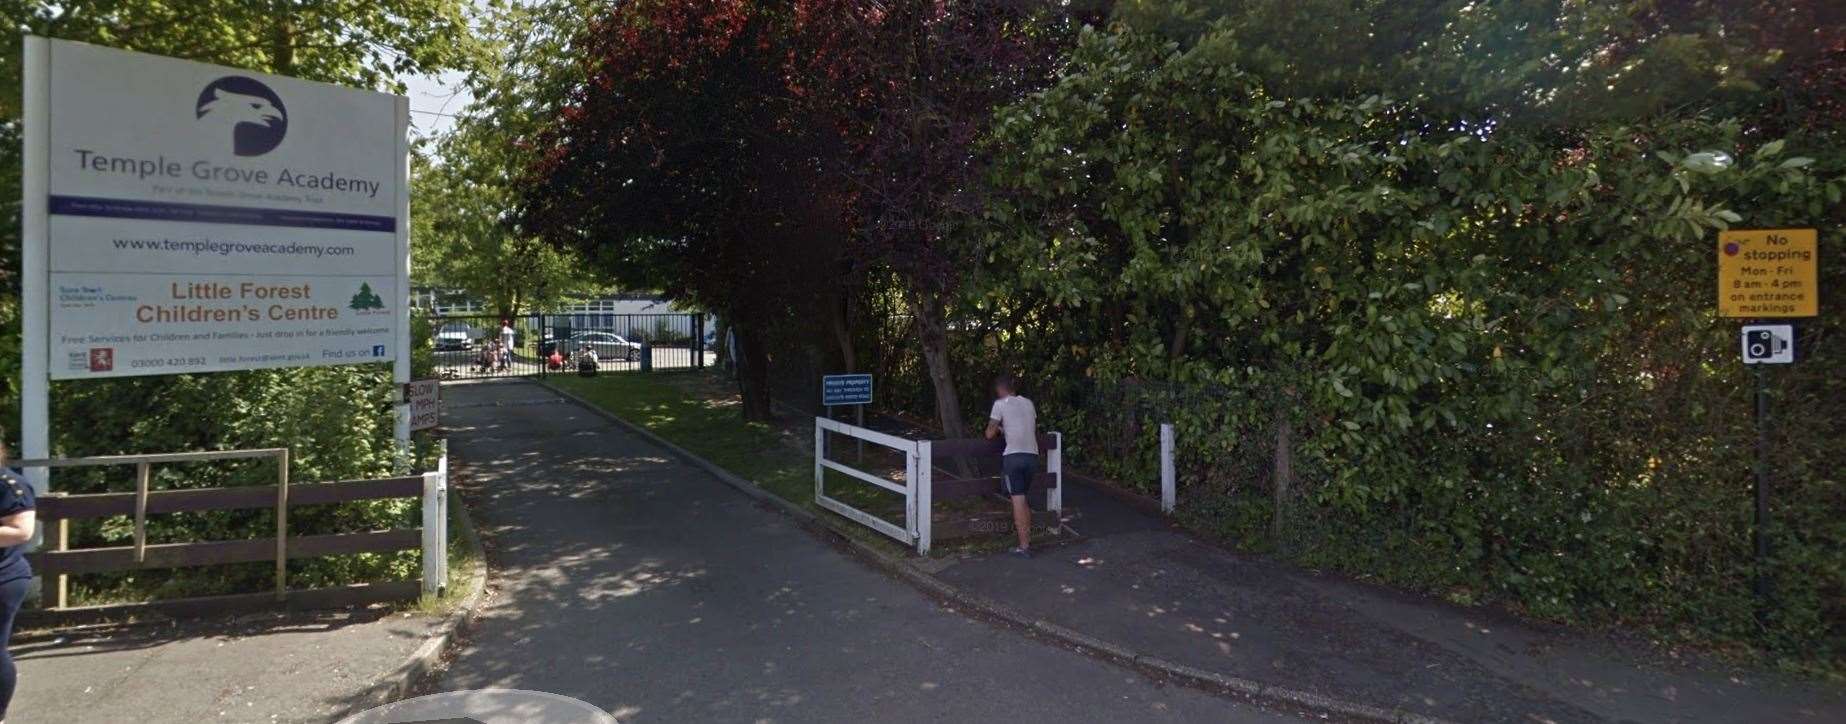 Temple Grove Academy in Tunbridge Wells. Picture: Google Street View